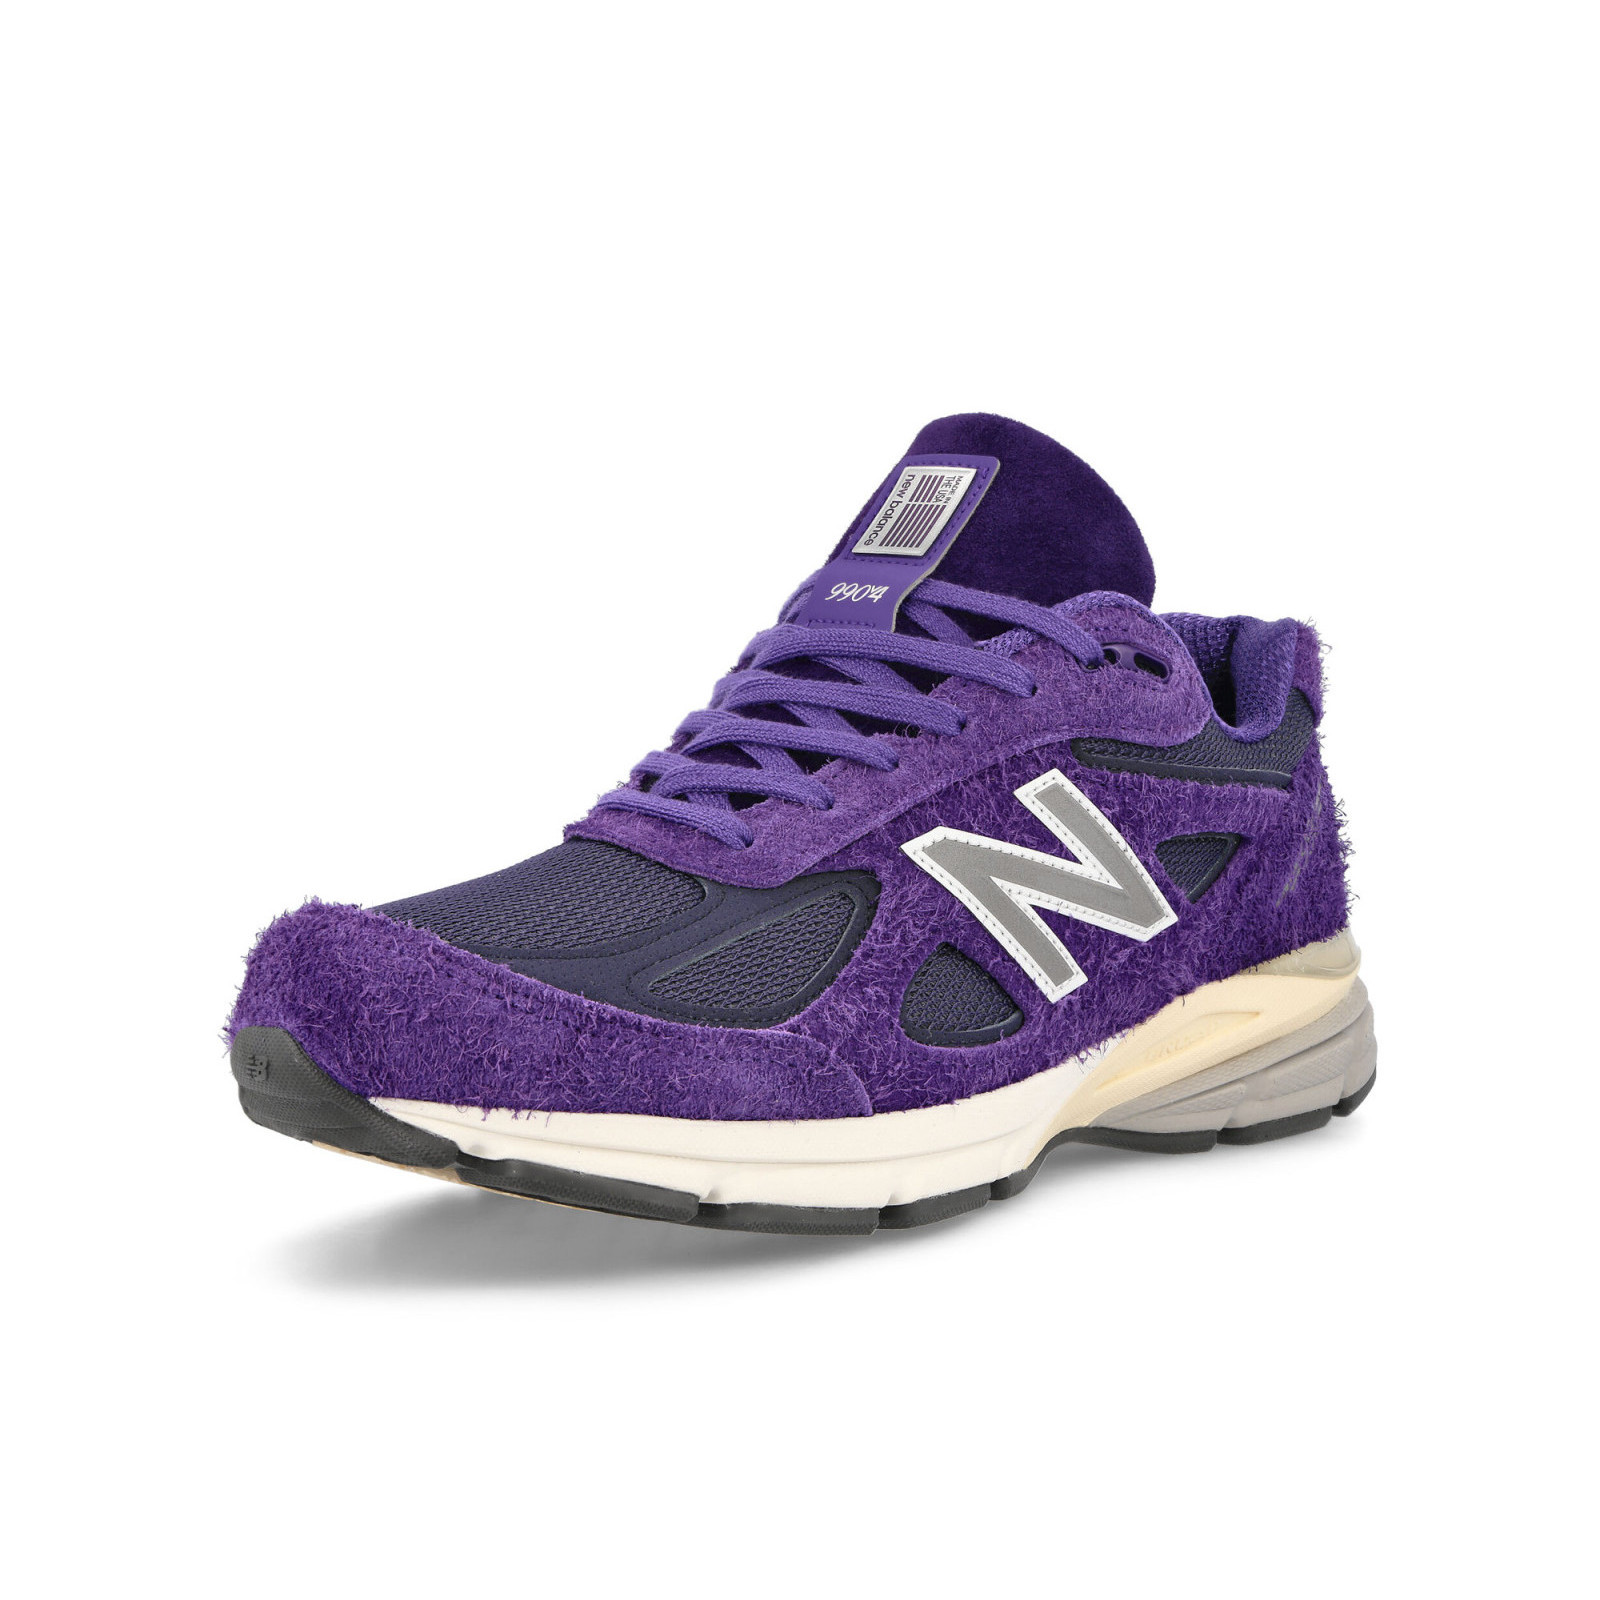 New Balance U990TB4
Purple / White